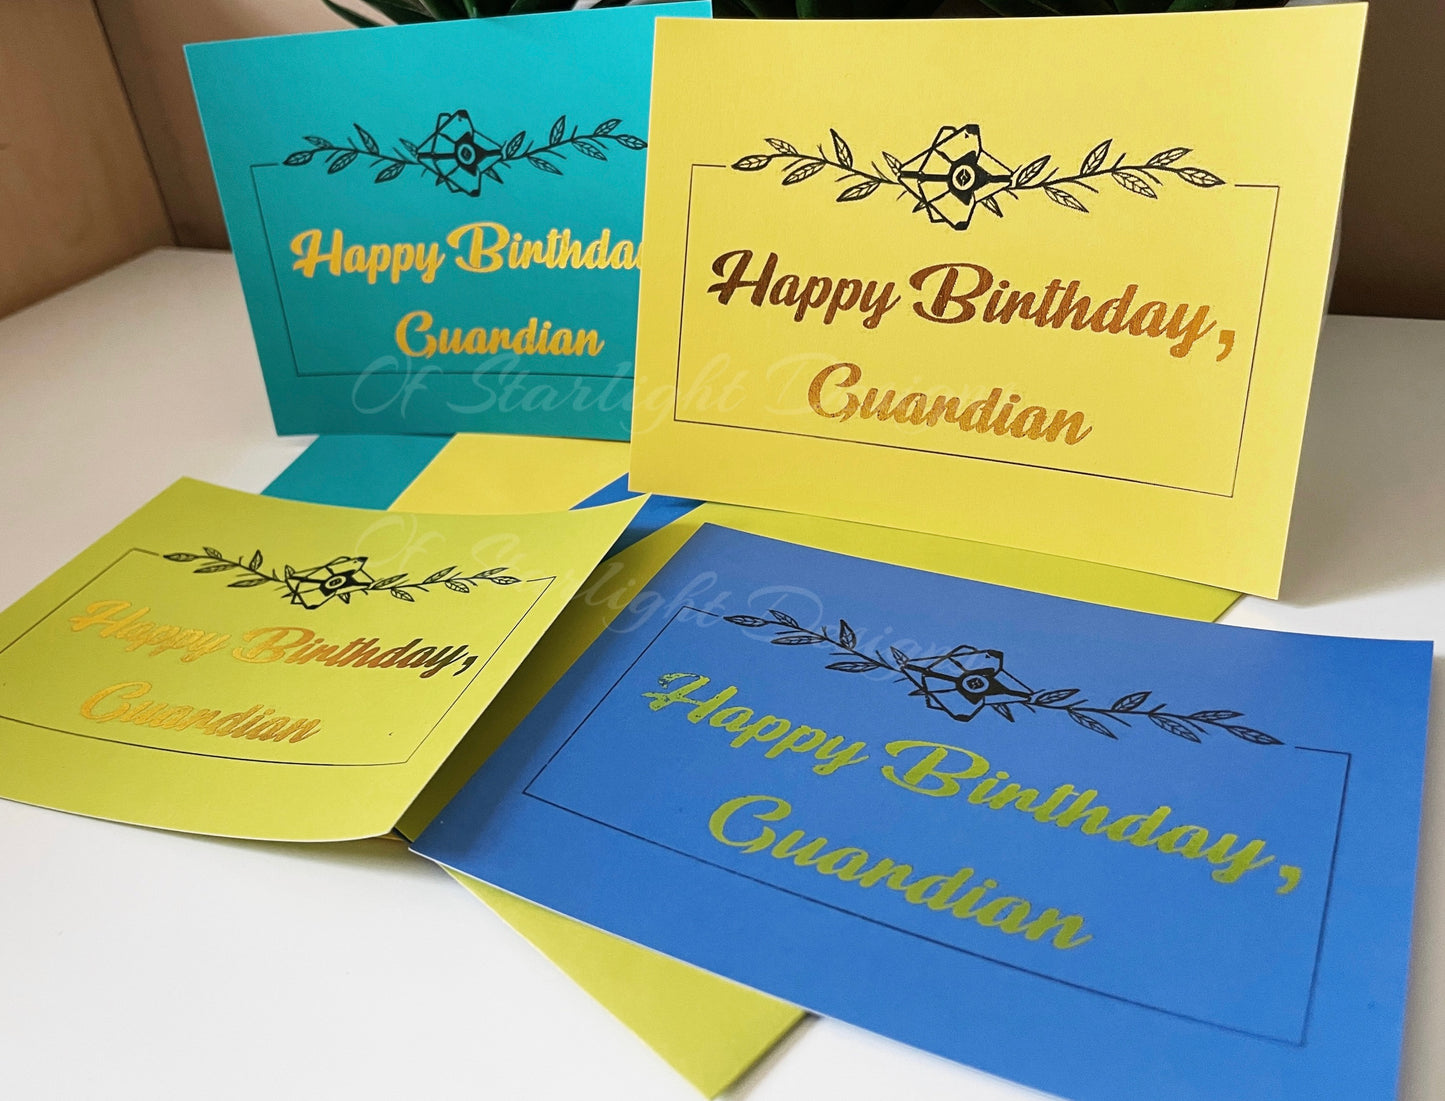 Happy Birthday Guardian Card Packs